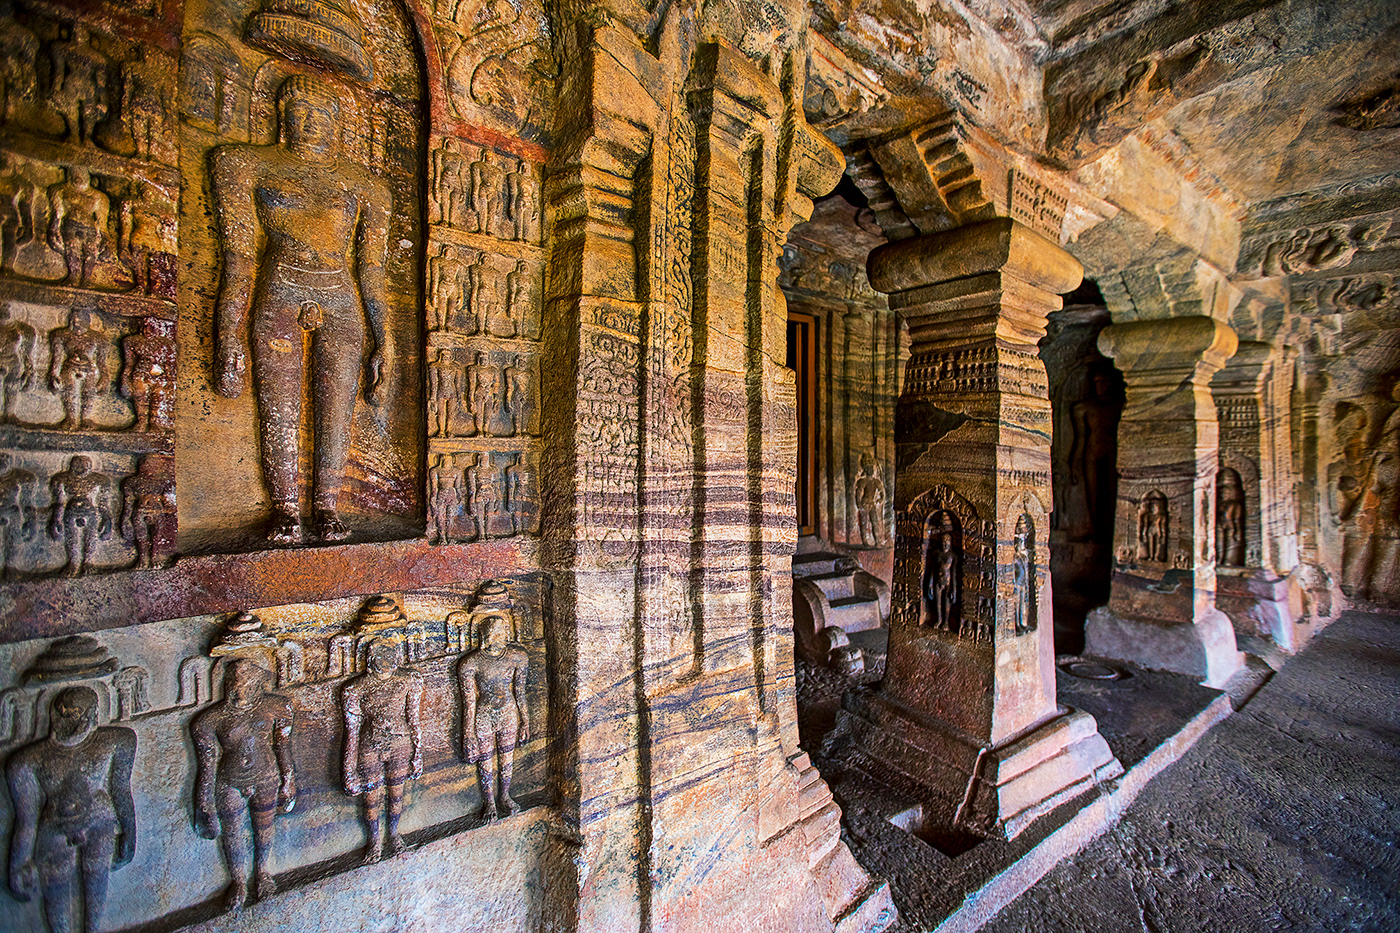 badami karnataka aihole pattadakal architechture Landscape India mahakuta gods Travel